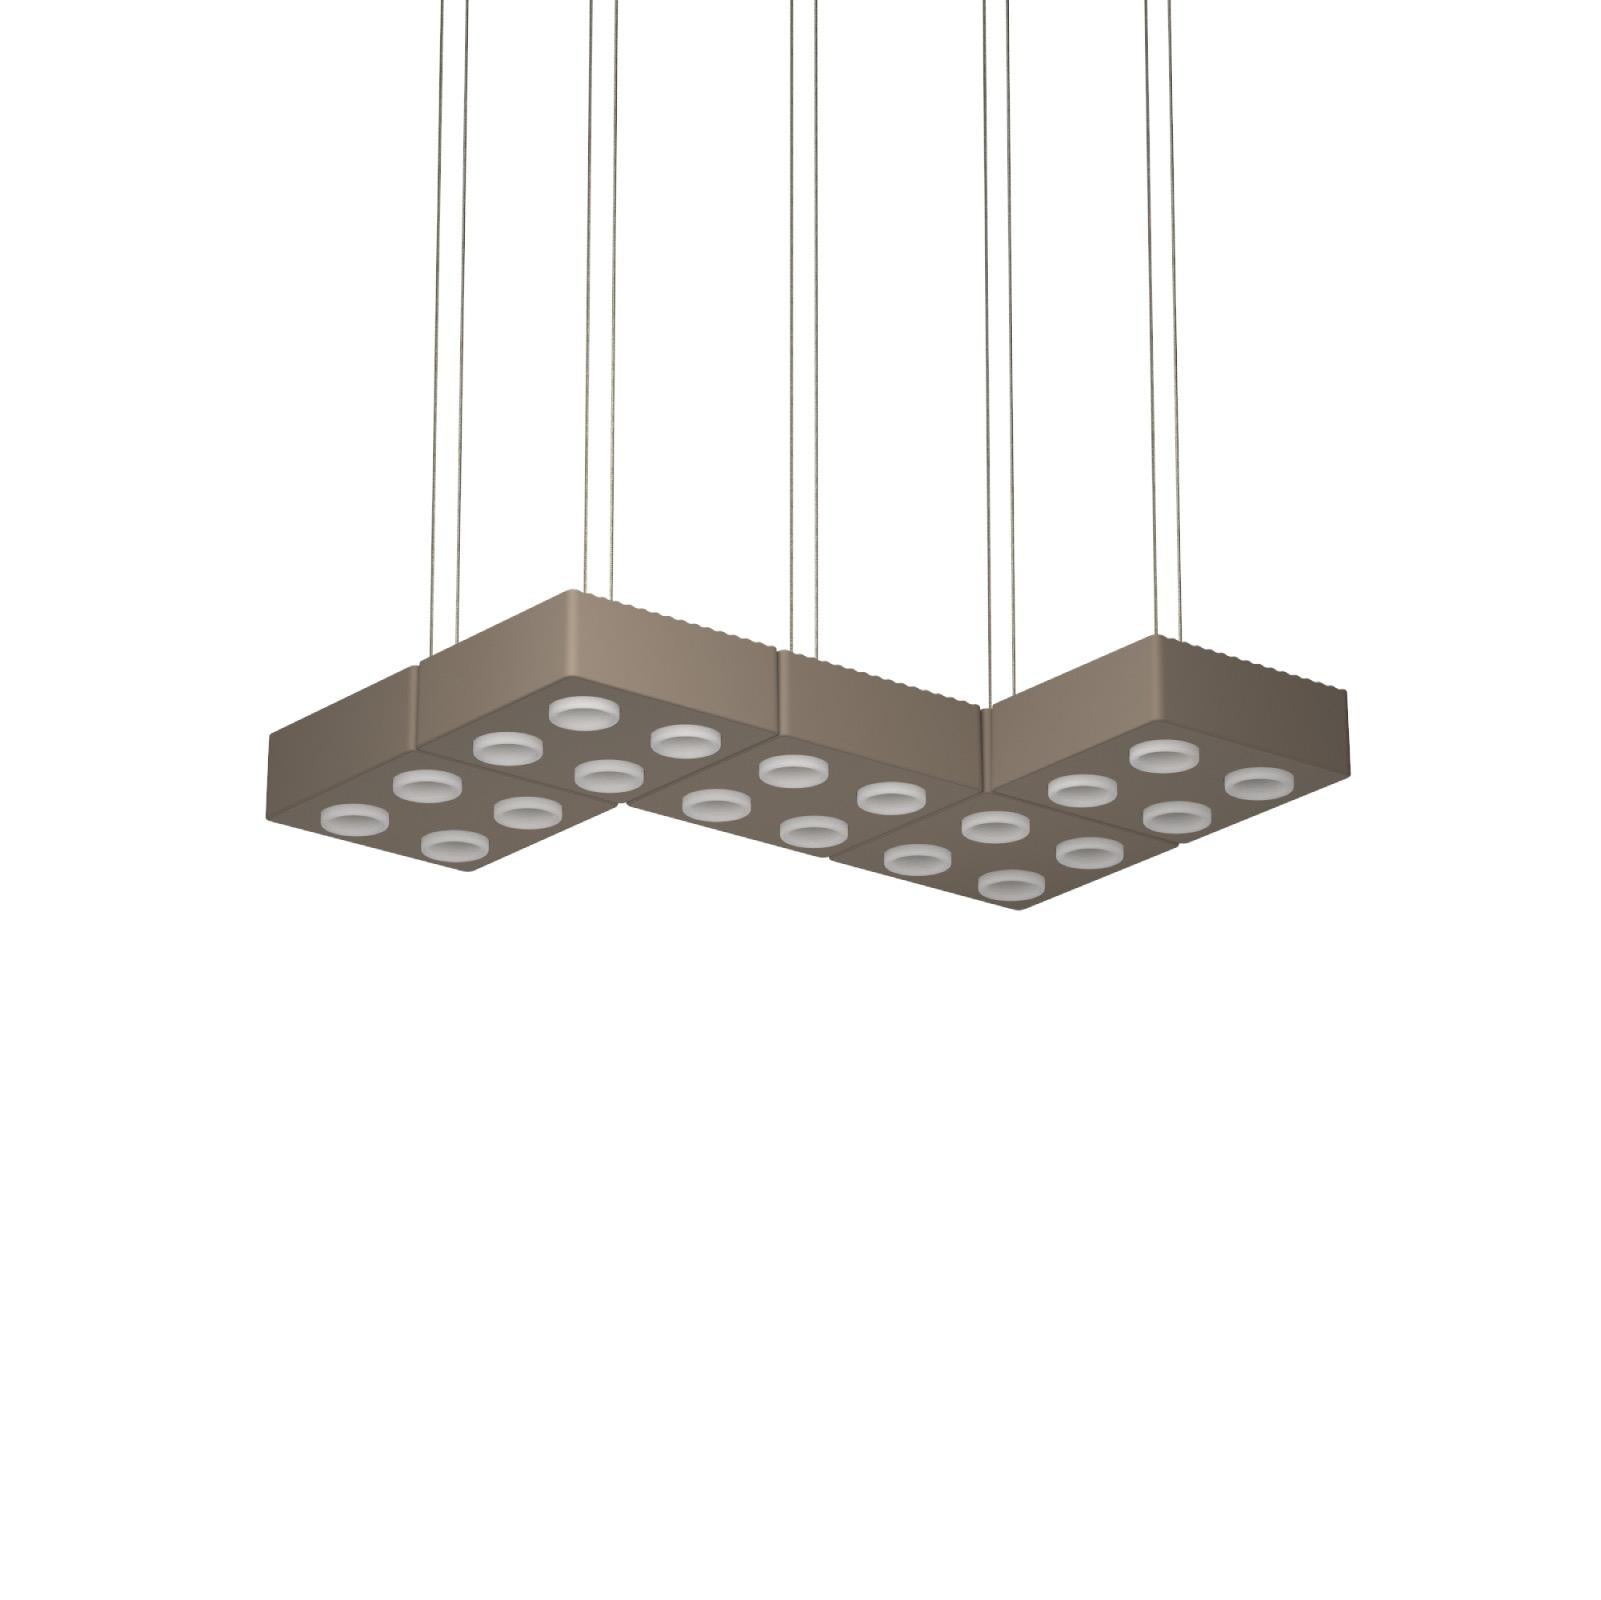 Domino Pendant lamp by Sylvain Willenz x AGO Lighting
Mud Gray - Quintet Pendant Lamp

Materials: Aluminum 
Light Source: Integrated LED (COB), DC
Watt. 75 W (15W x 5) 
Color temp. 2700 / 3000K
Cable Length: 3M 

Available